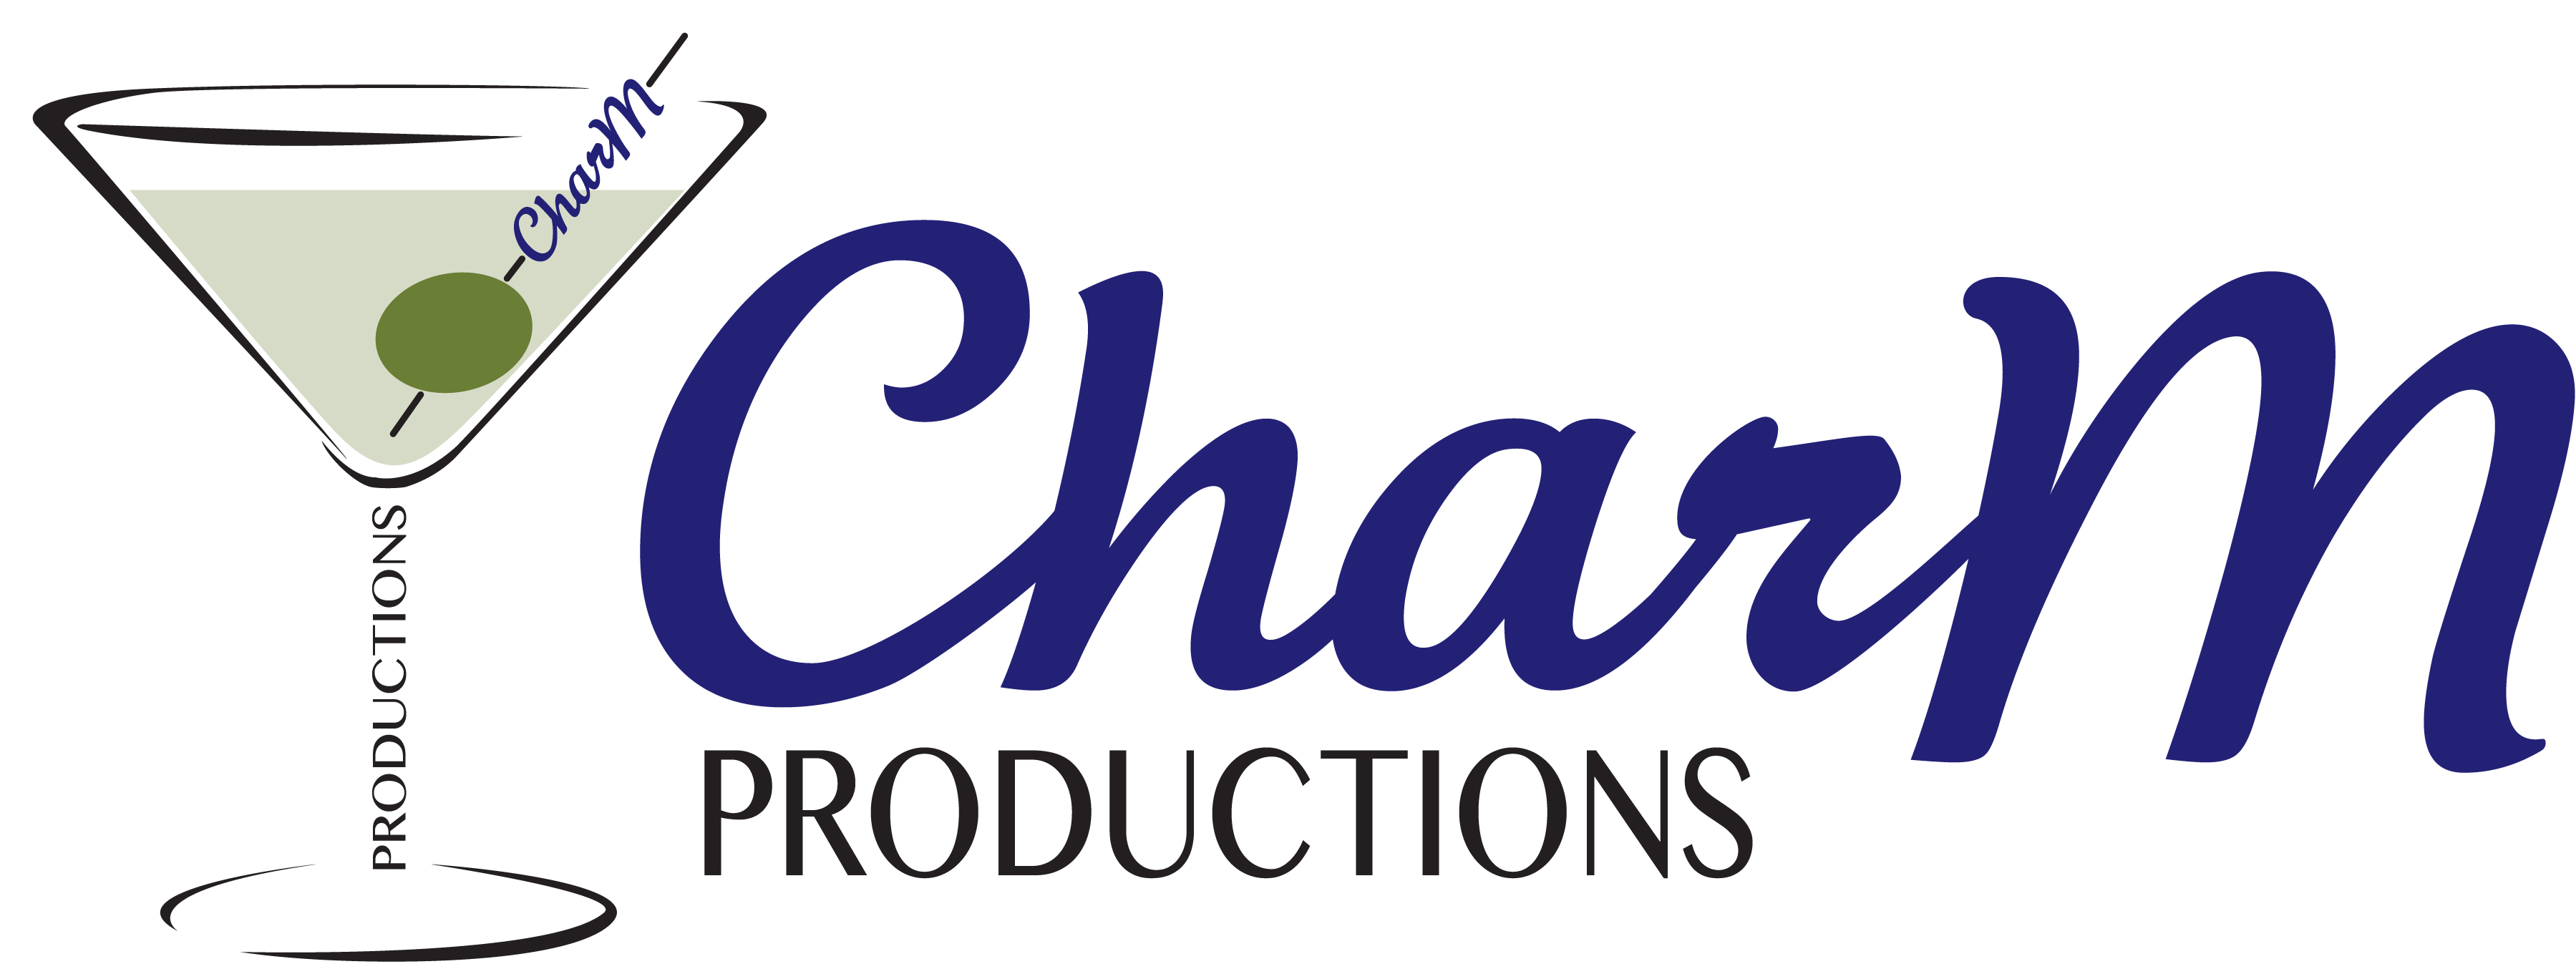 CharM productions logo